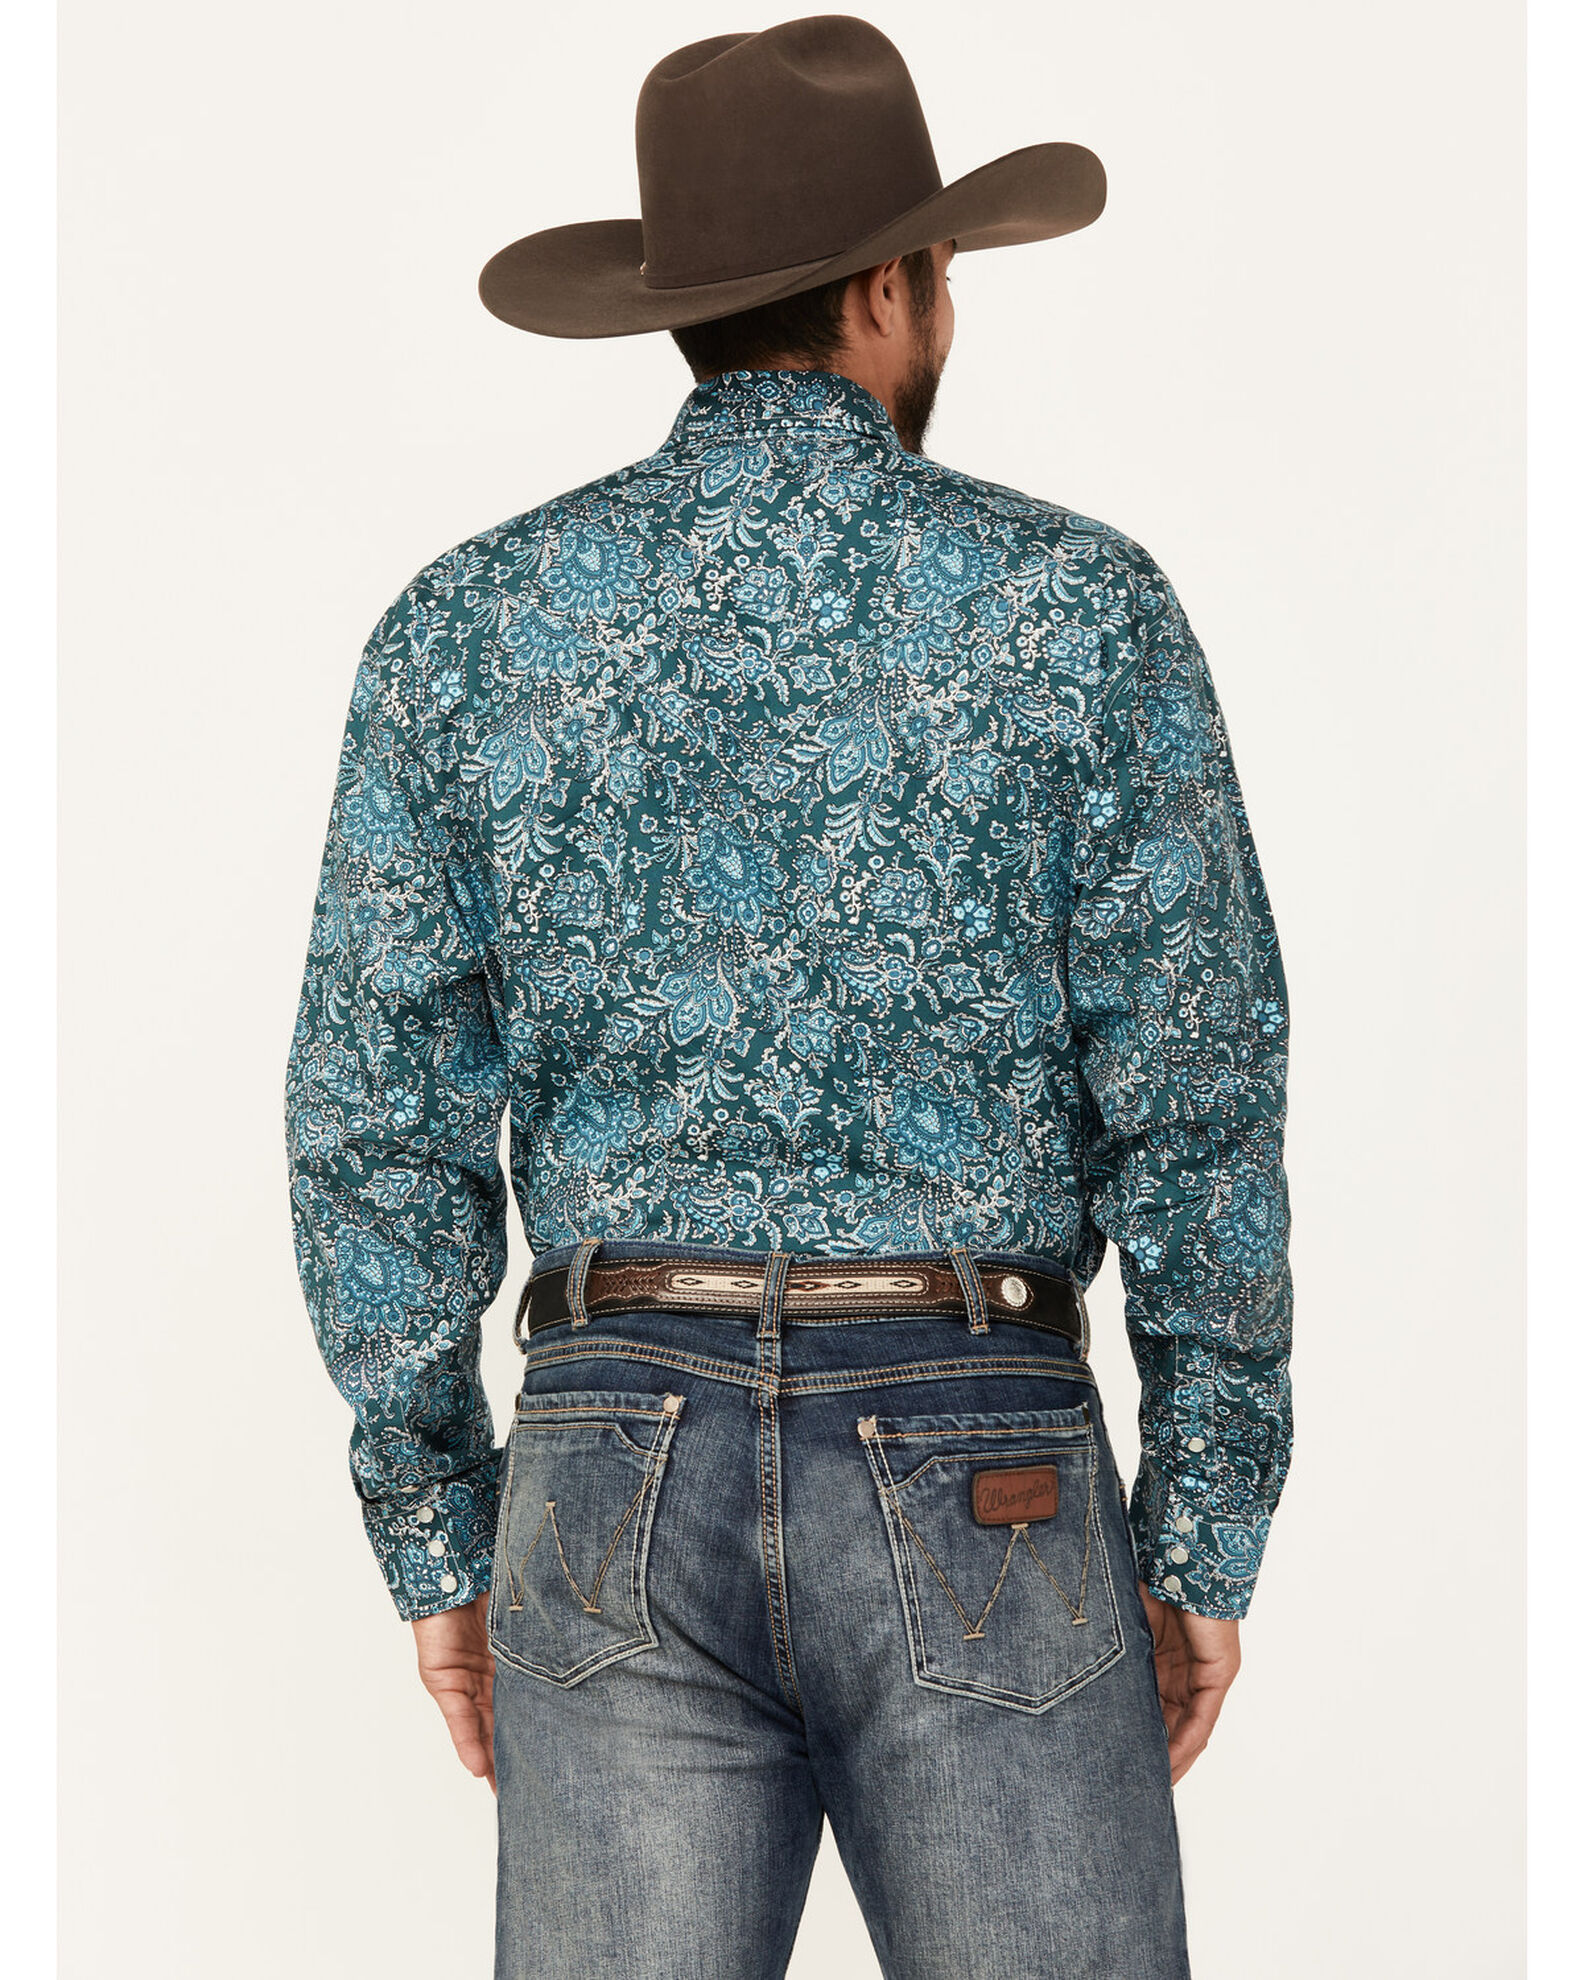 Pearl Snap Western Shirts: DFW Fancy Cowboy Western Wear in Stock.